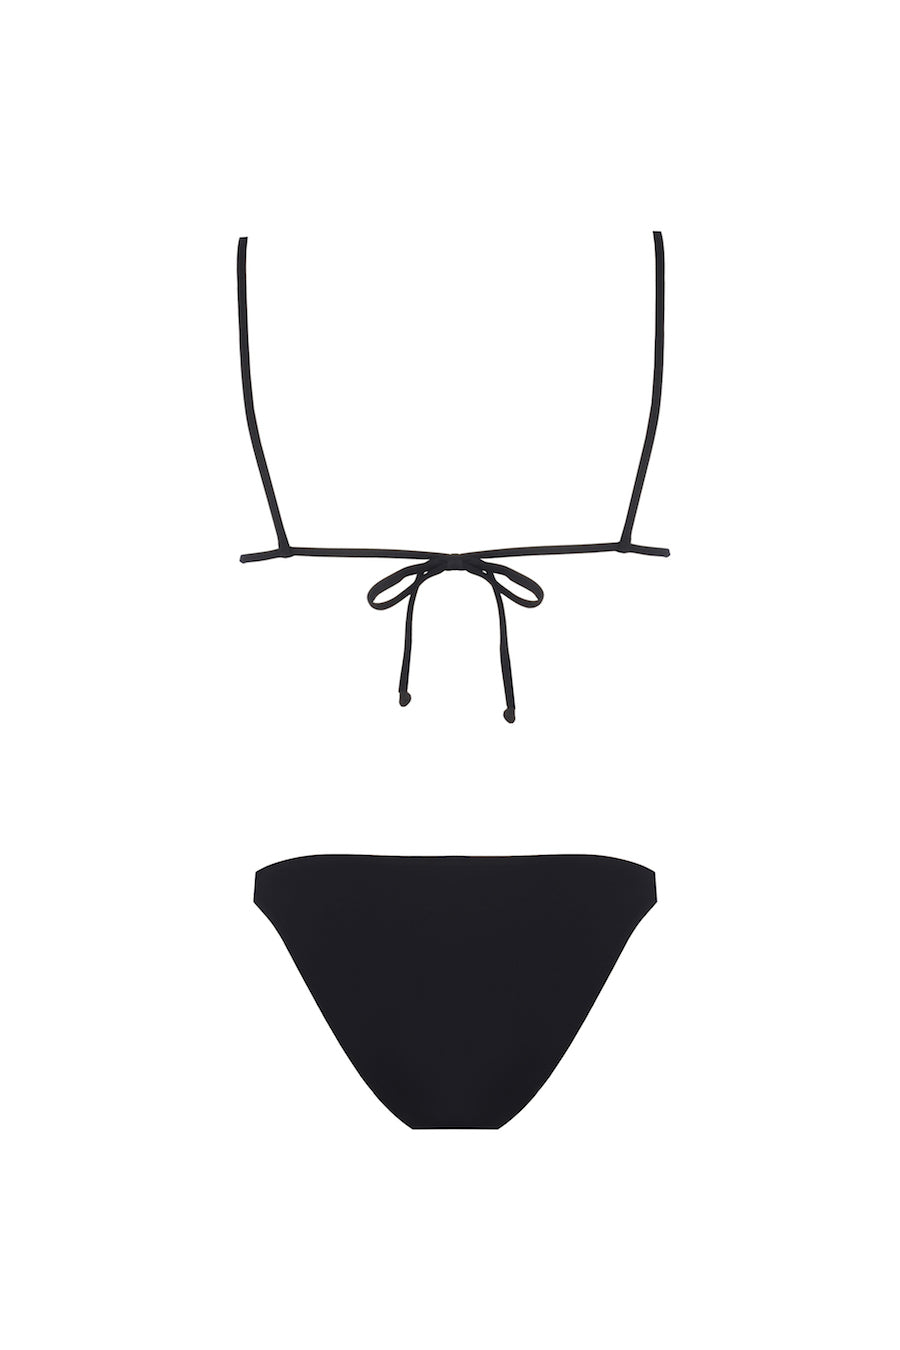 Celine Black Bikini